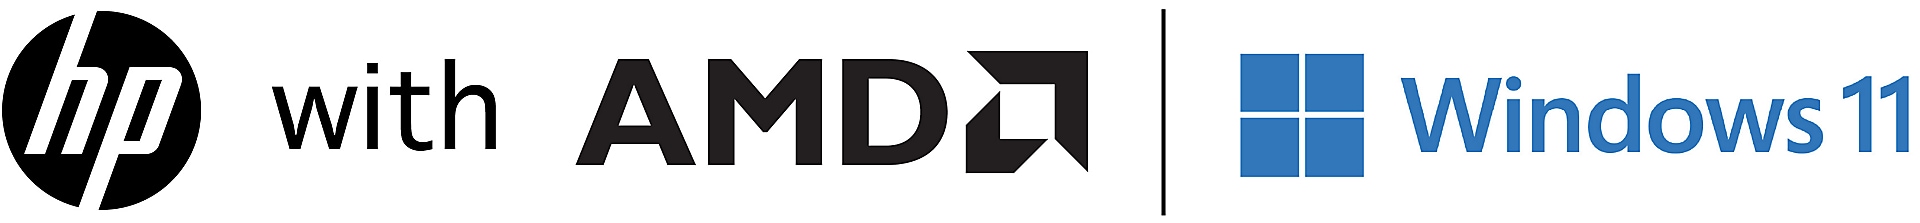 HP with AMD Windows 11 Logo